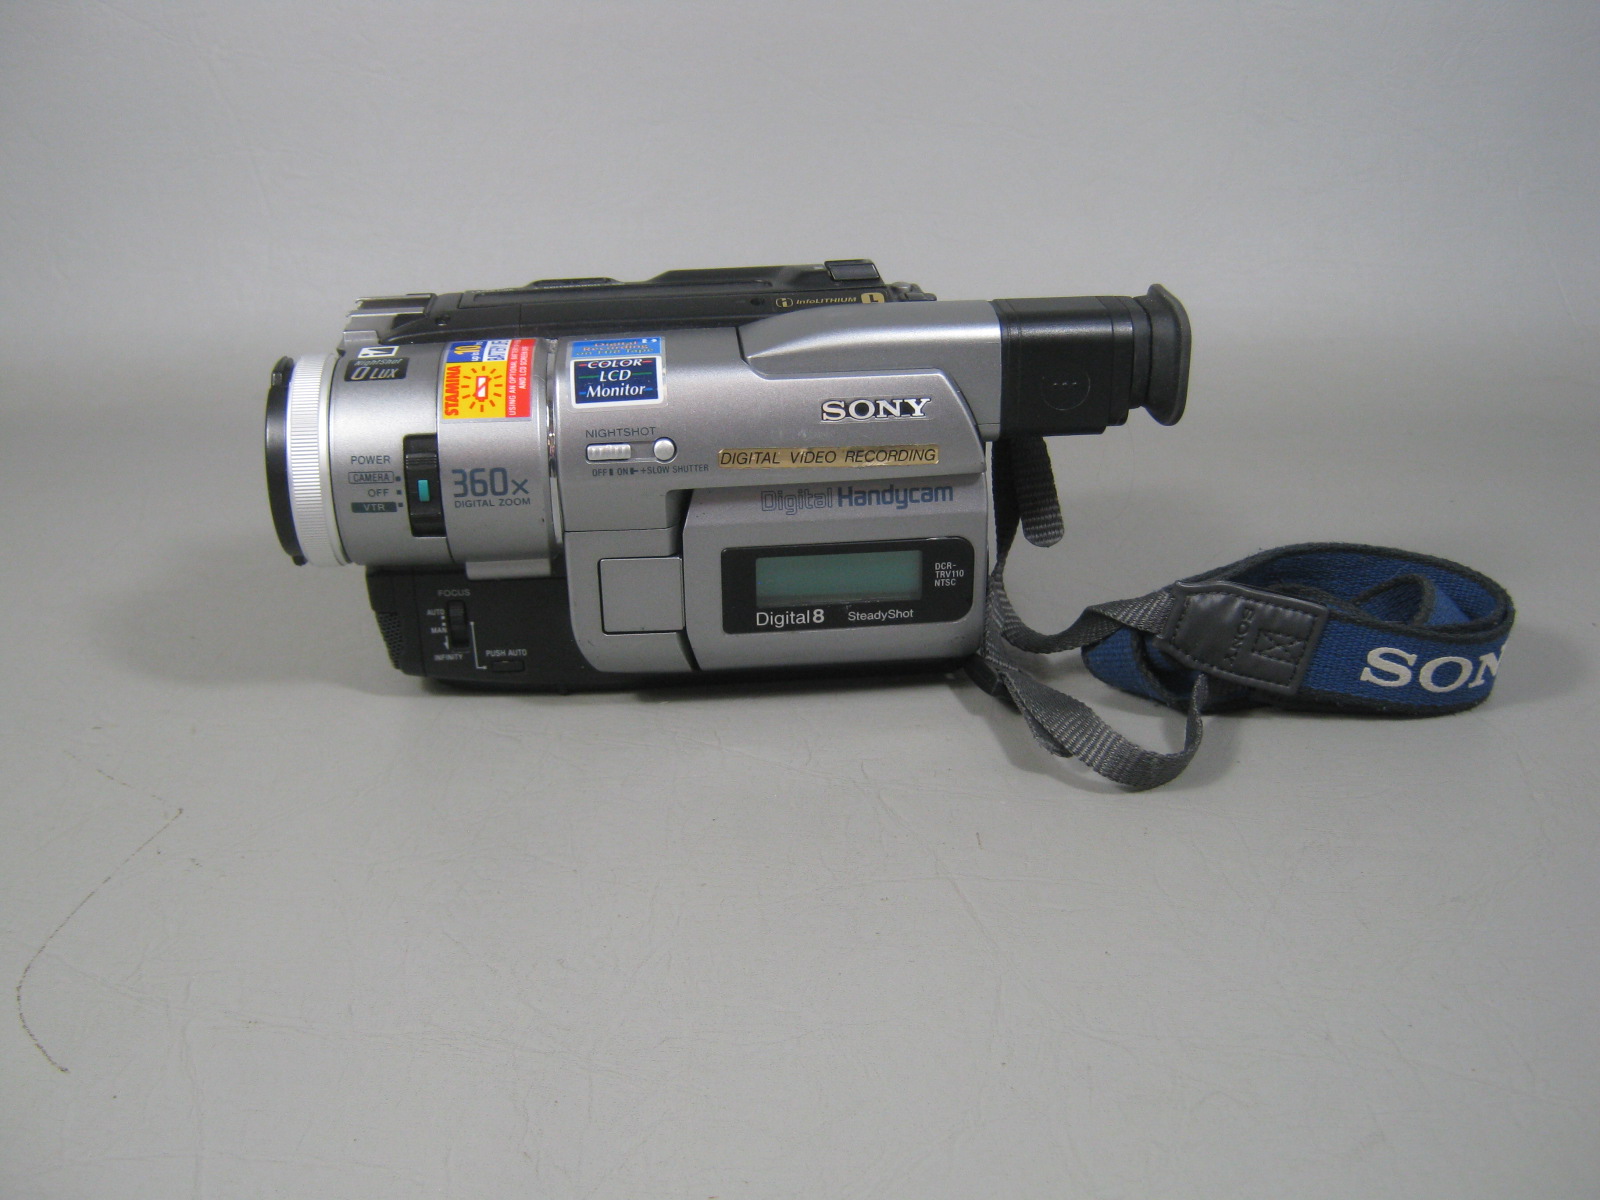 Sony Digital 8 Handycam DCR-TRV110 NTSC Video Camera Camcorder Nightshot Hi8 NR